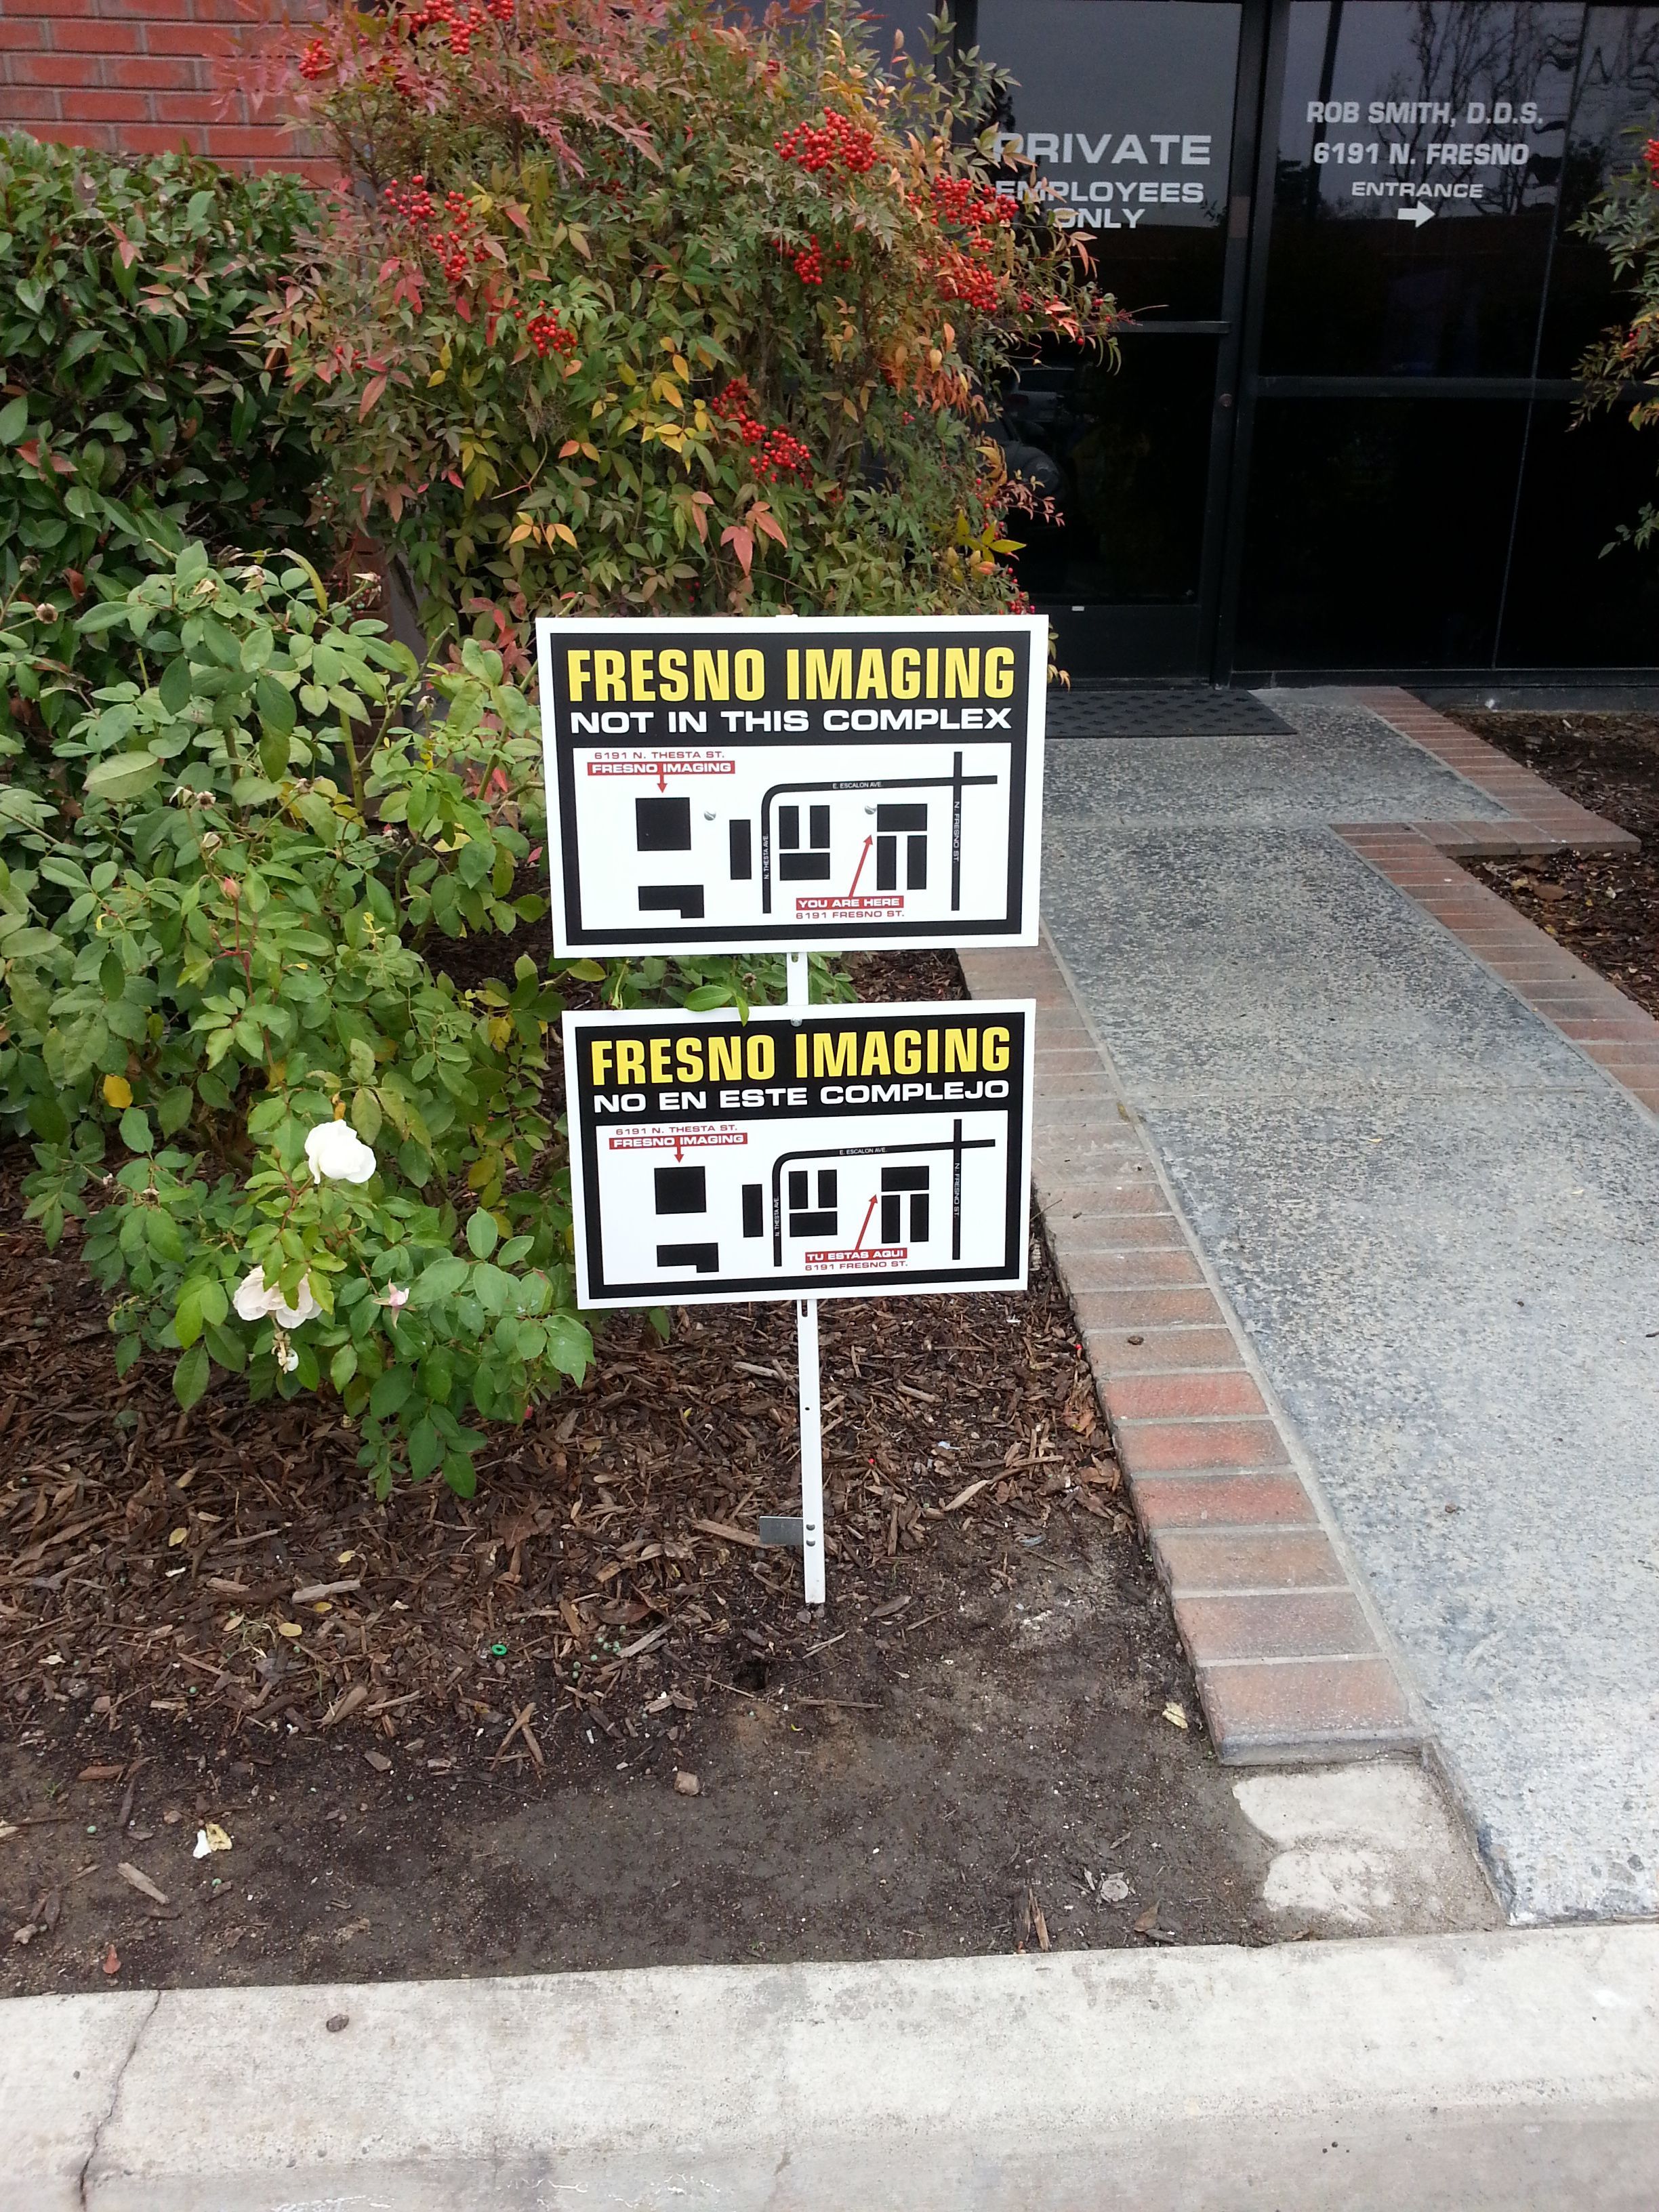 Fresno Imaging